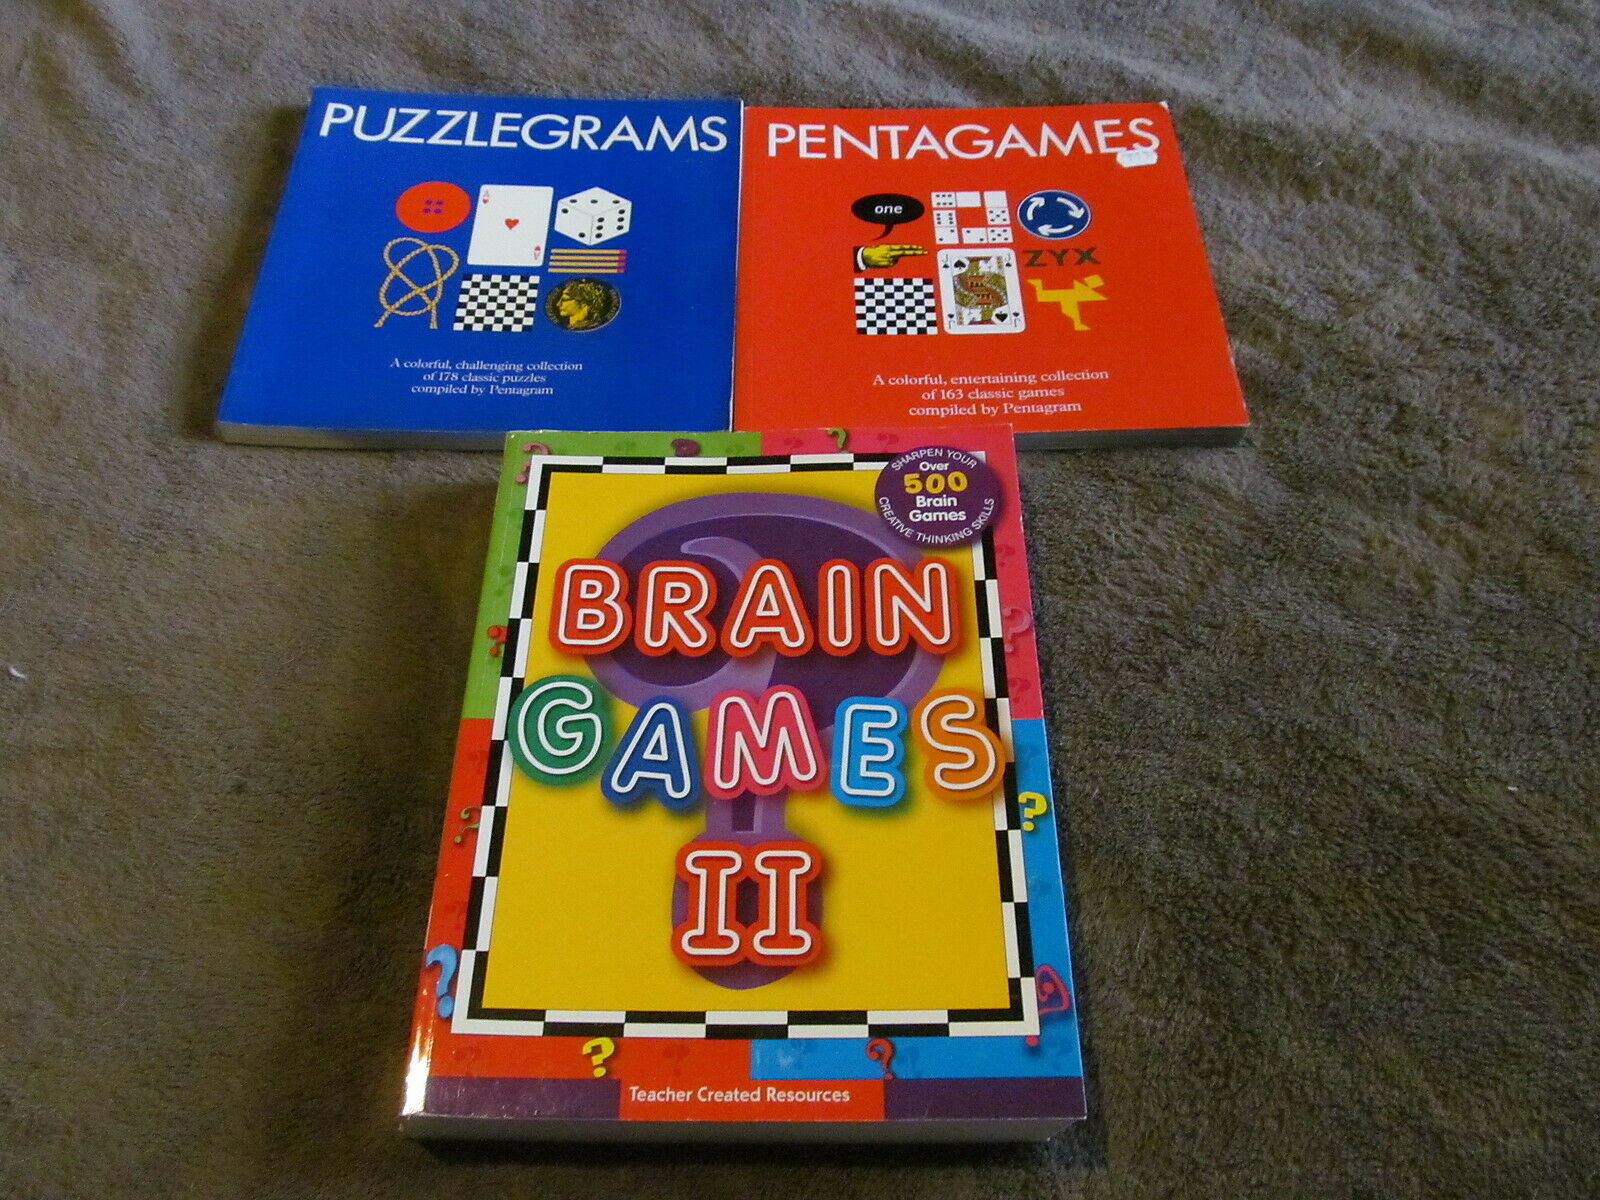 4 Fabulous Puzzle Games Books - Pentagames, Puzzlegrams, Brain Games Ii & More!!